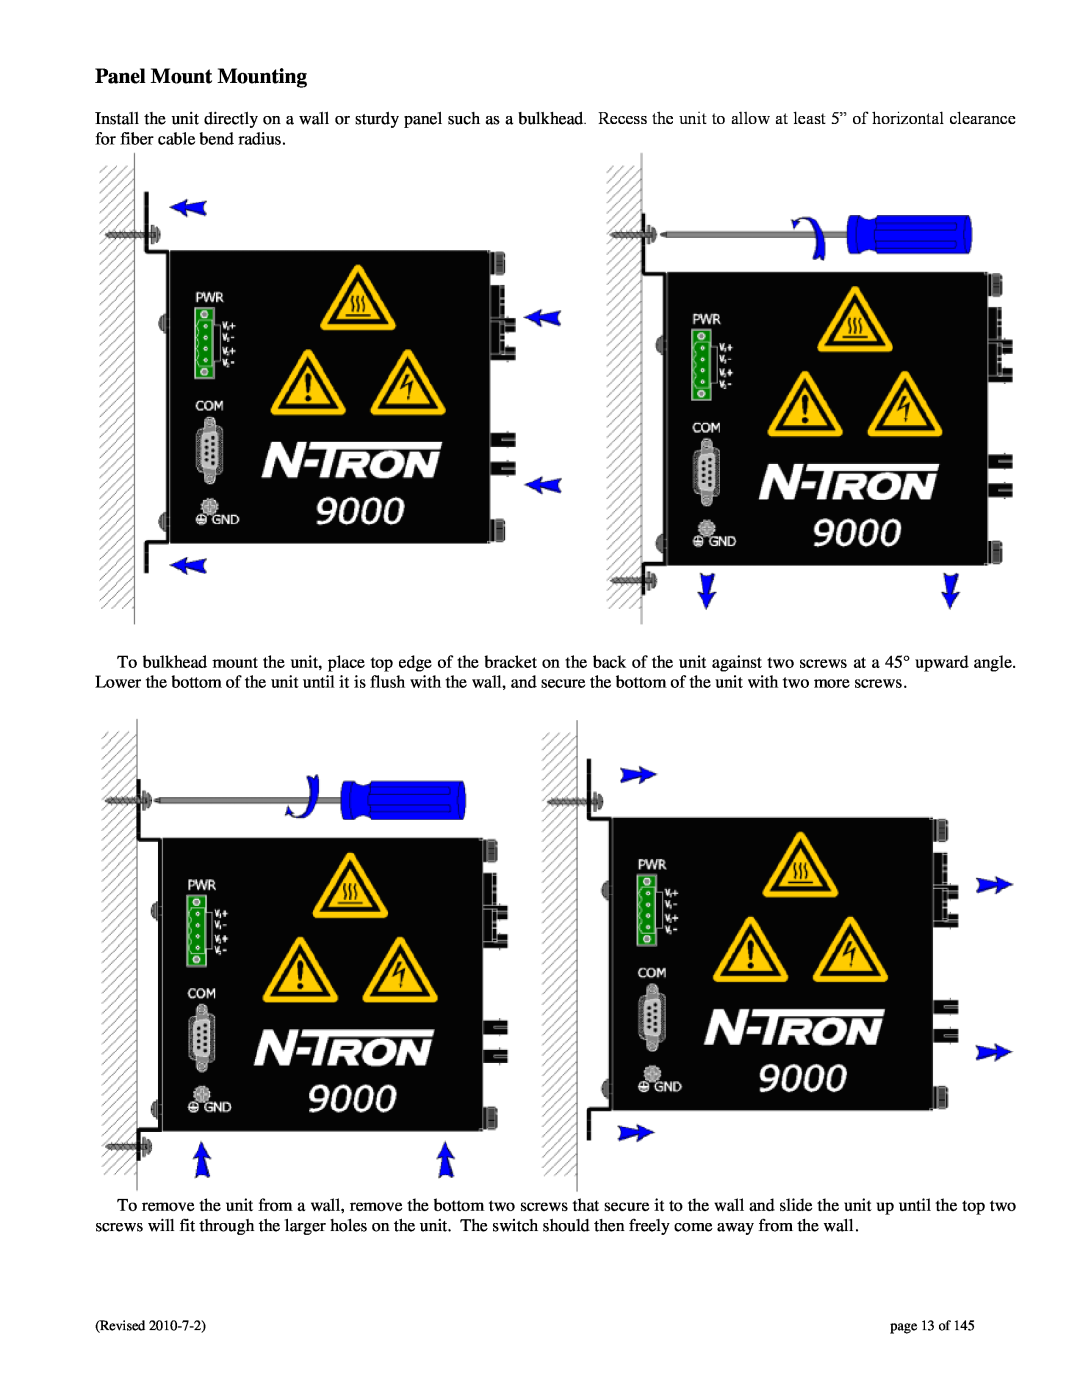 N-Tron 9000 user manual Panel Mount Mounting, page 13 of 